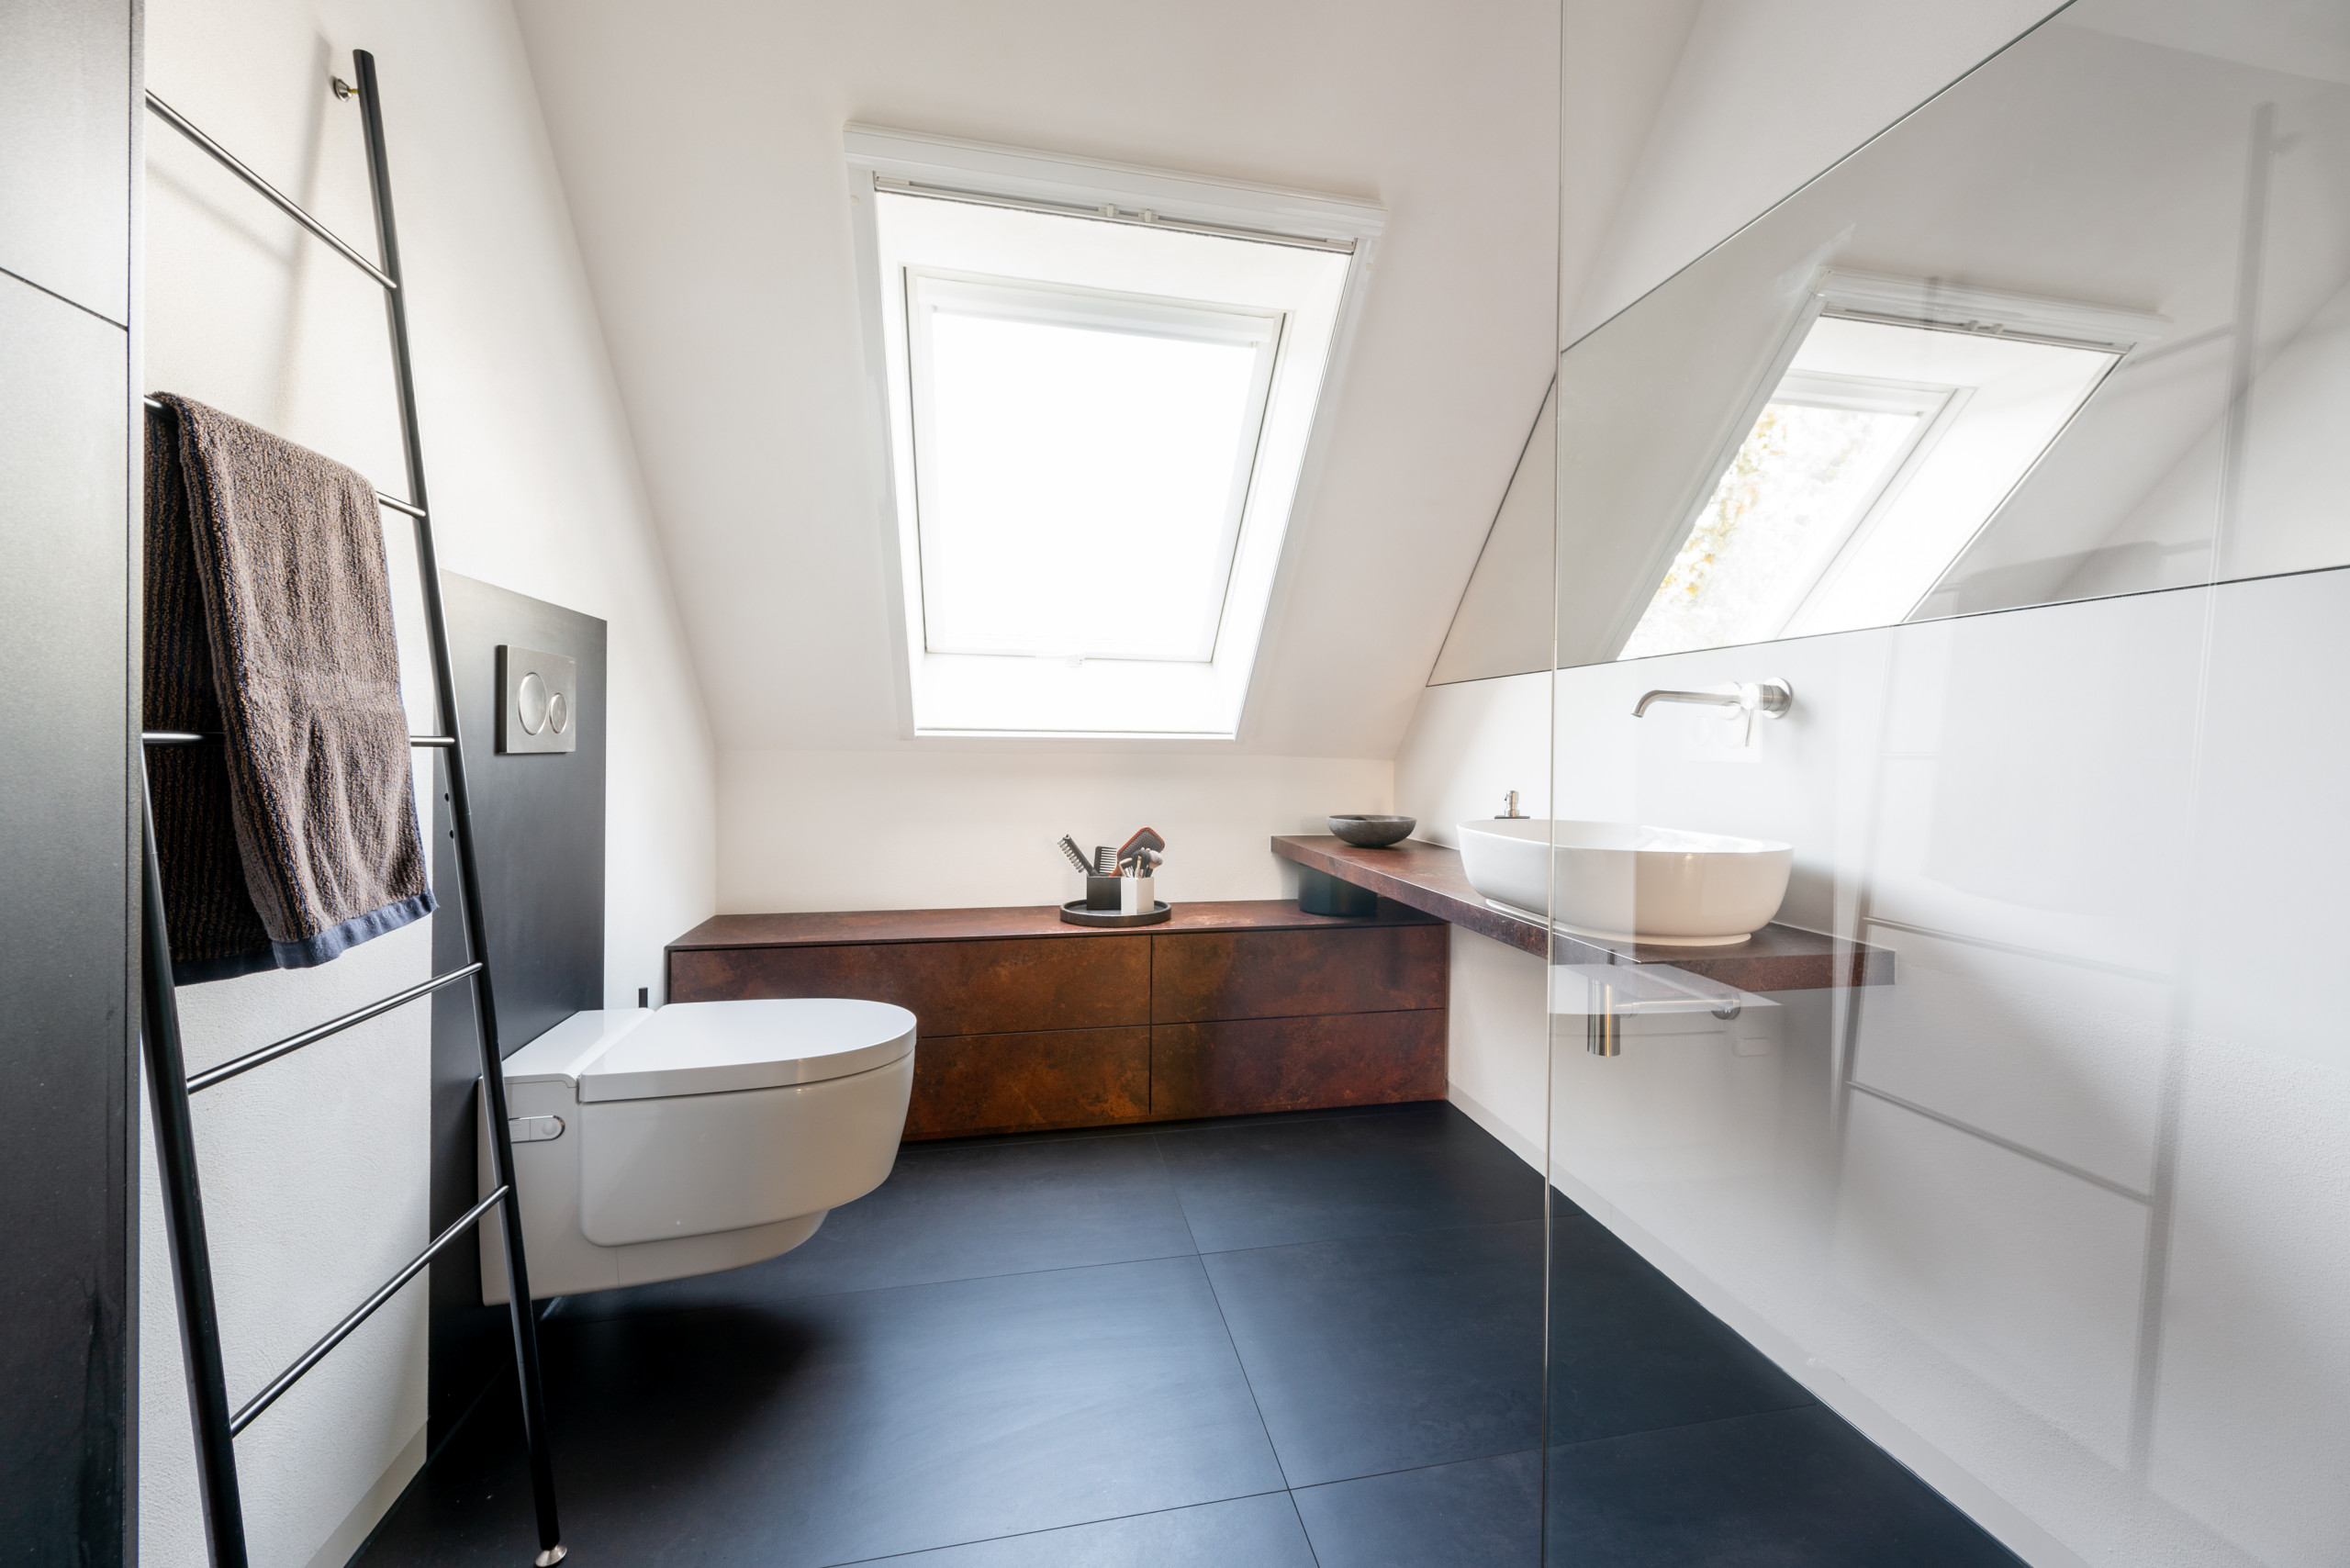 75 Moderne Badezimmer Ideen & Bilder | Houzz